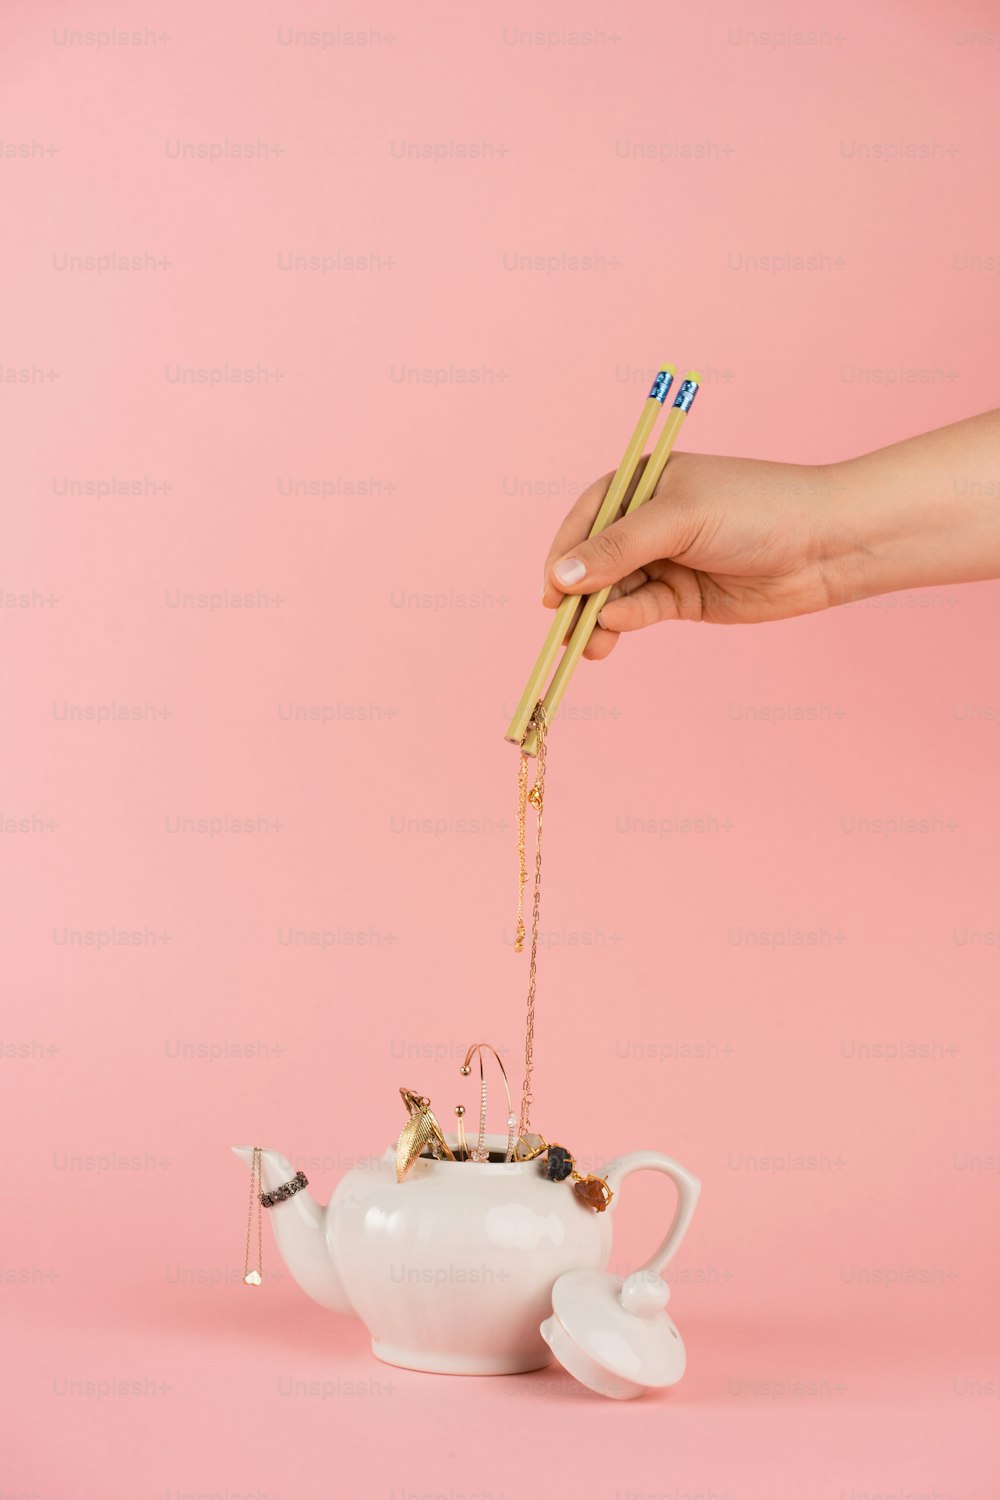 a person holding a pair of chopsticks over a teapot